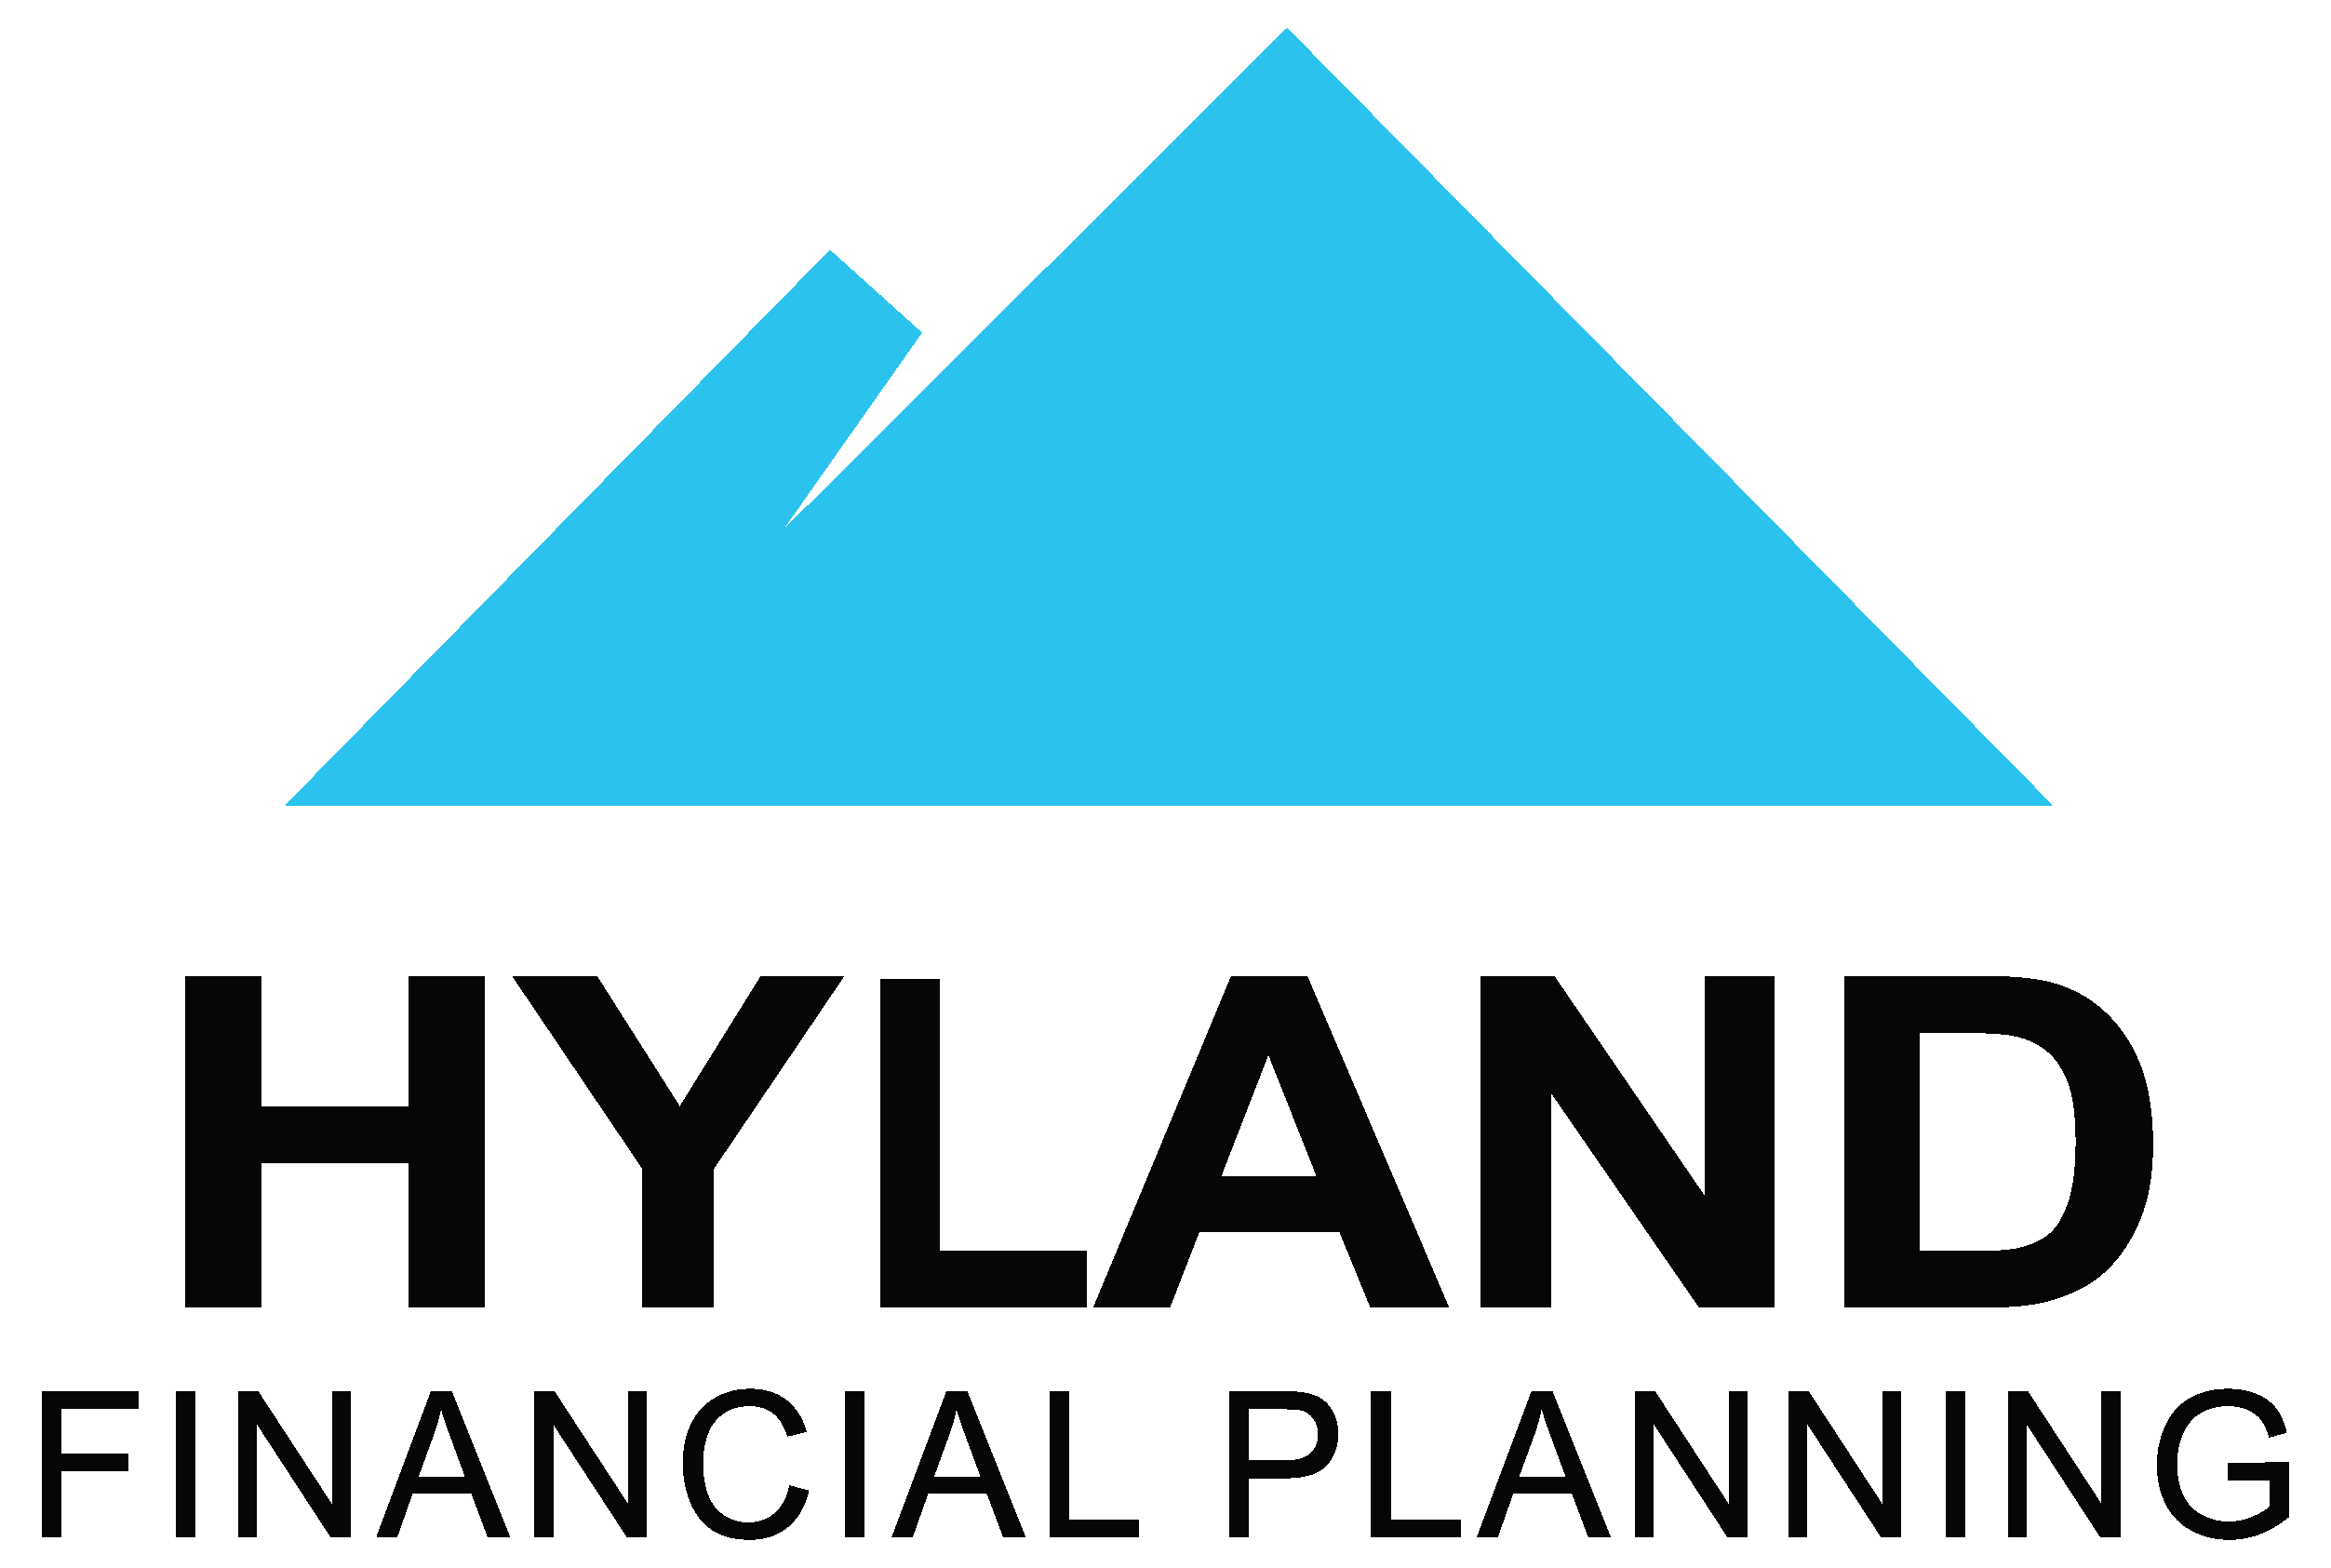 Hyland Financial Planning